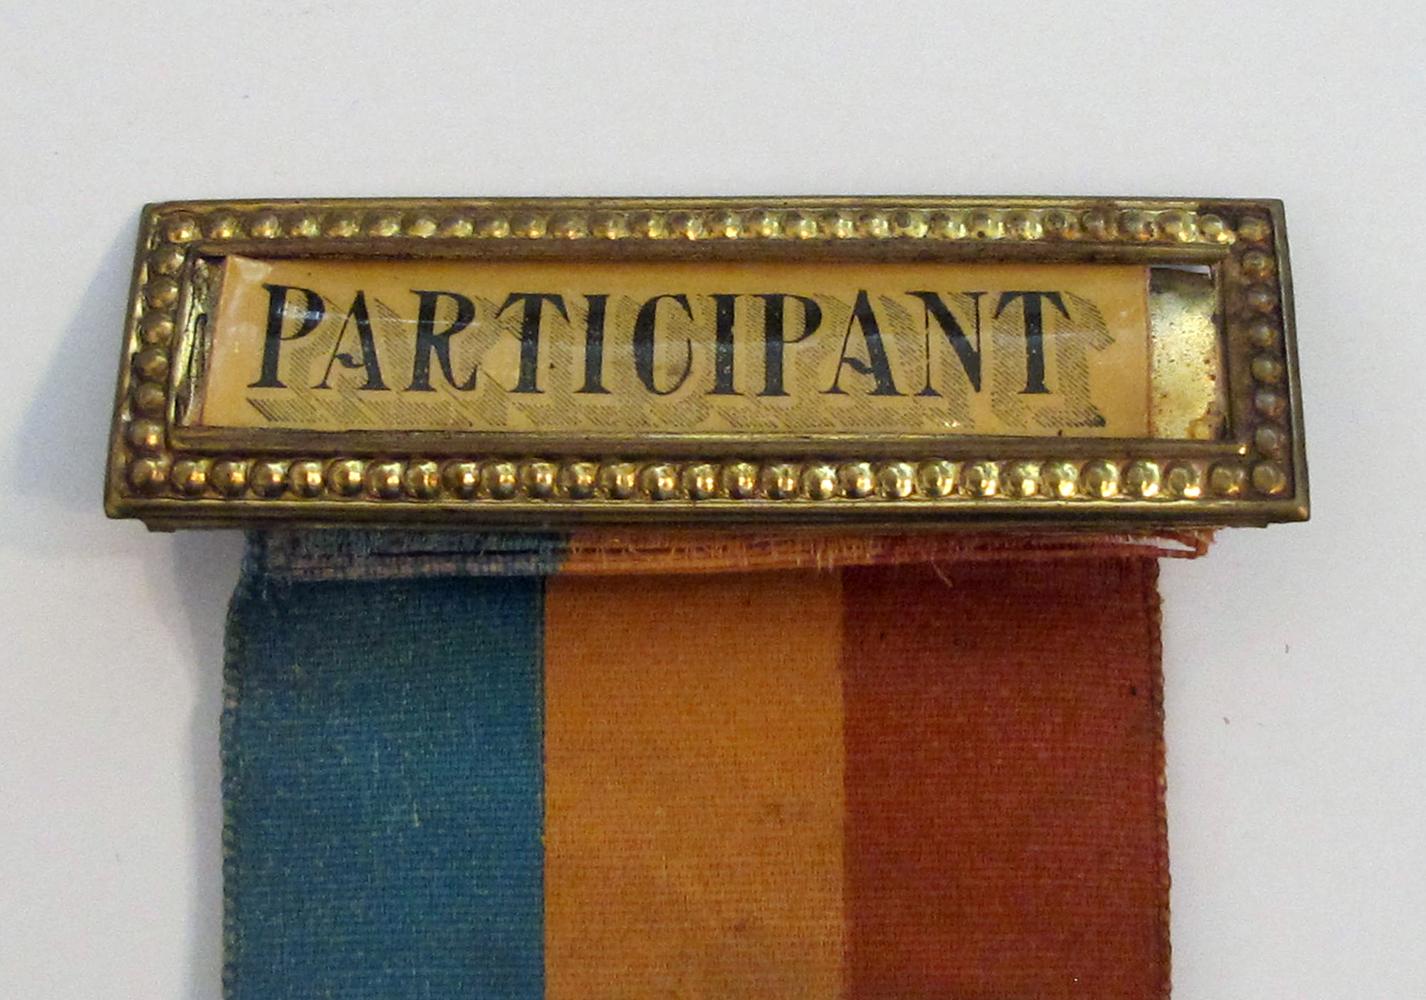 American San Francisco Panama-Pacific Exposition of 1915 Souvenir Banner & Entrance Badge